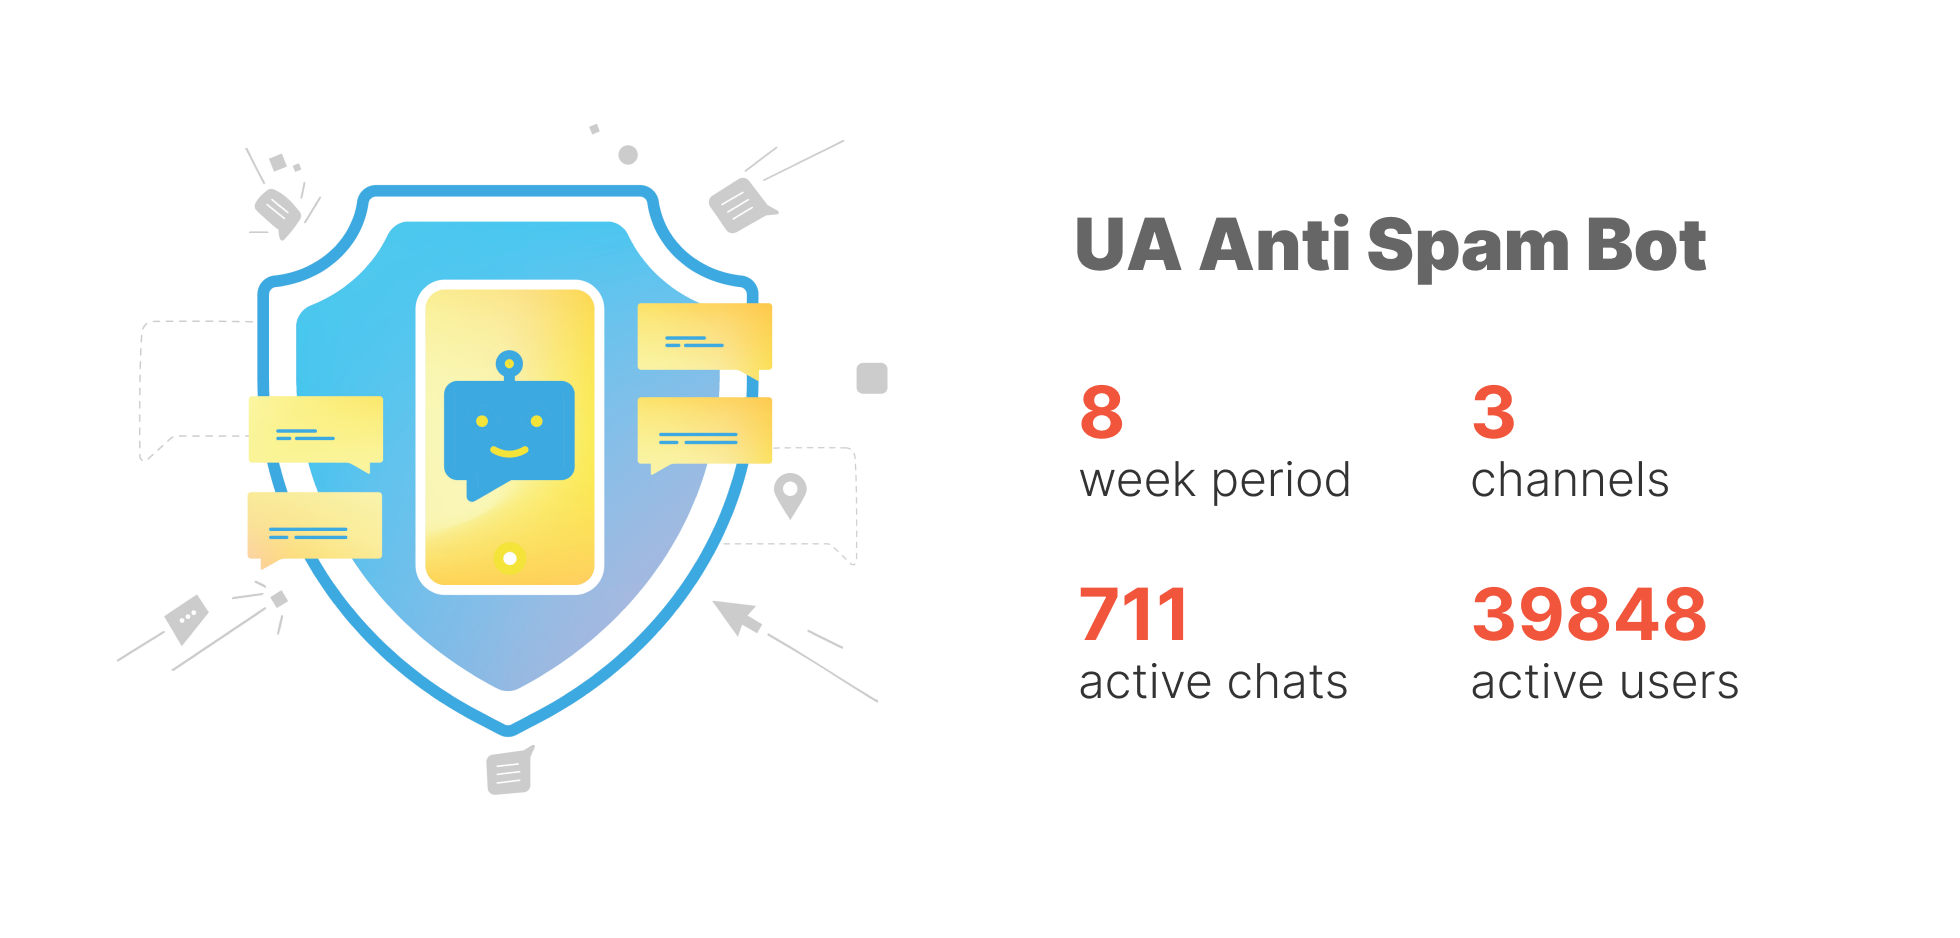 UA Anti Spam Bot results